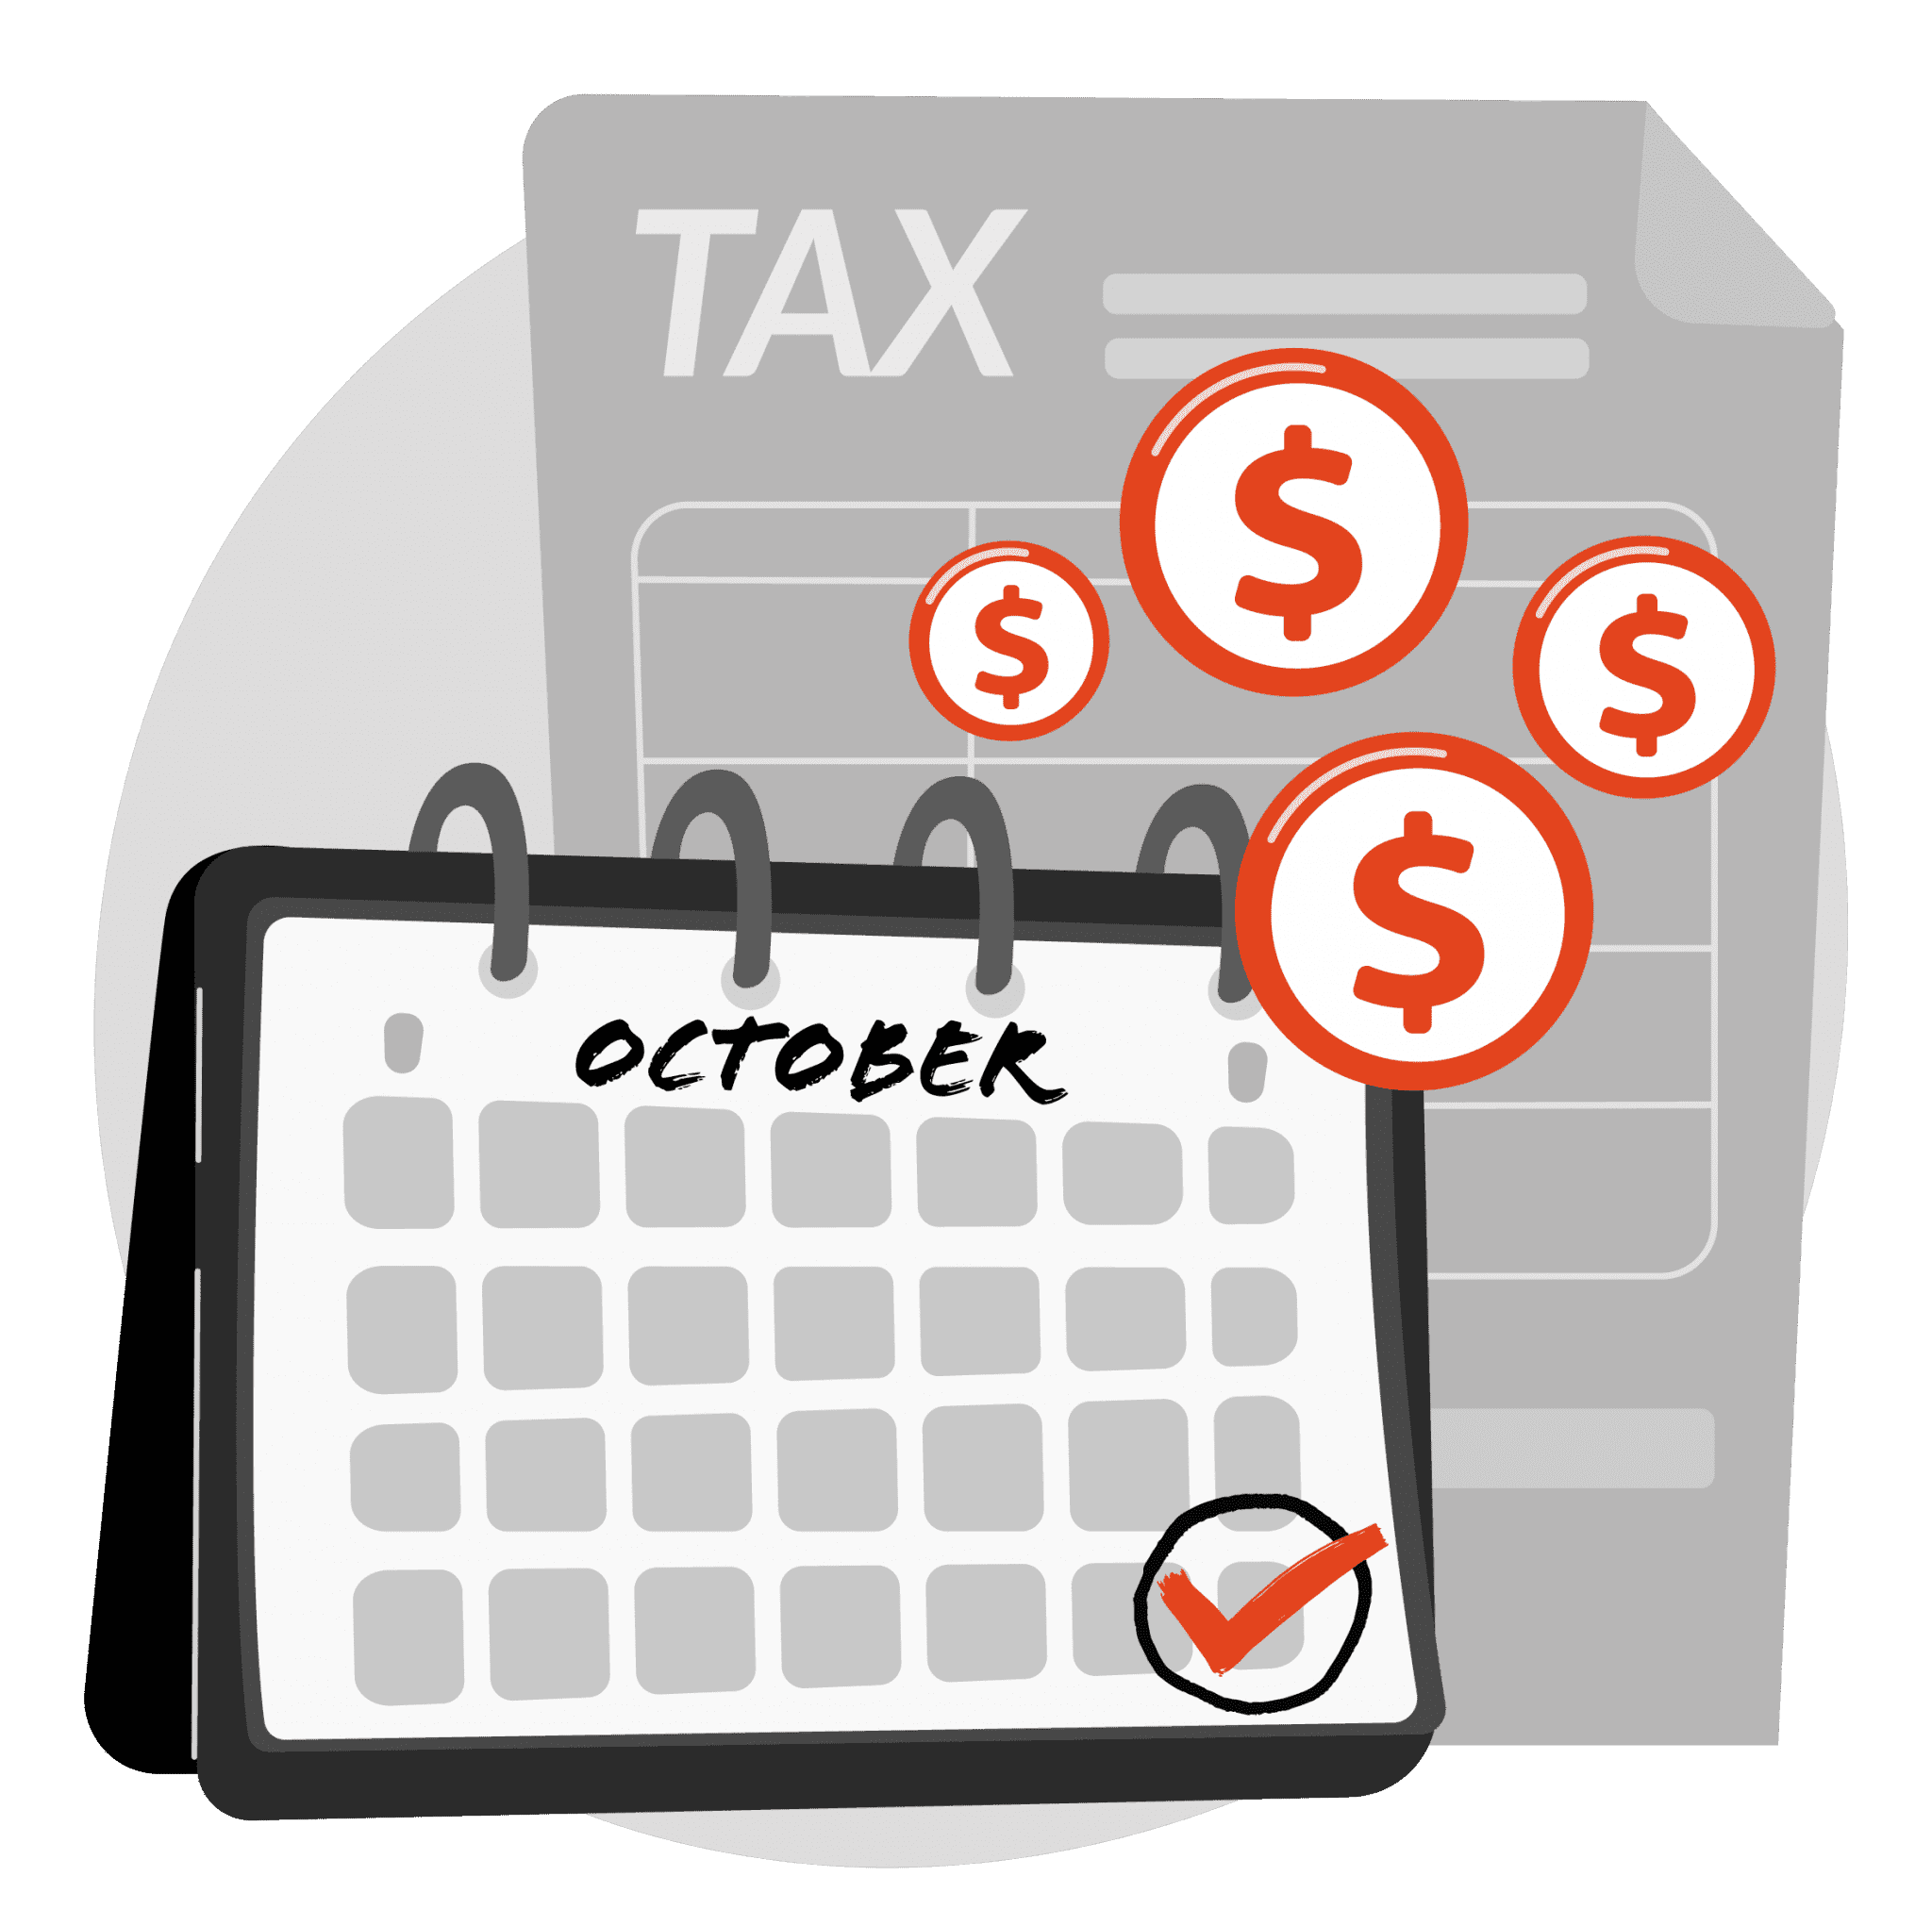 tax-return-deadline-t-minus-october-31-one-click-life